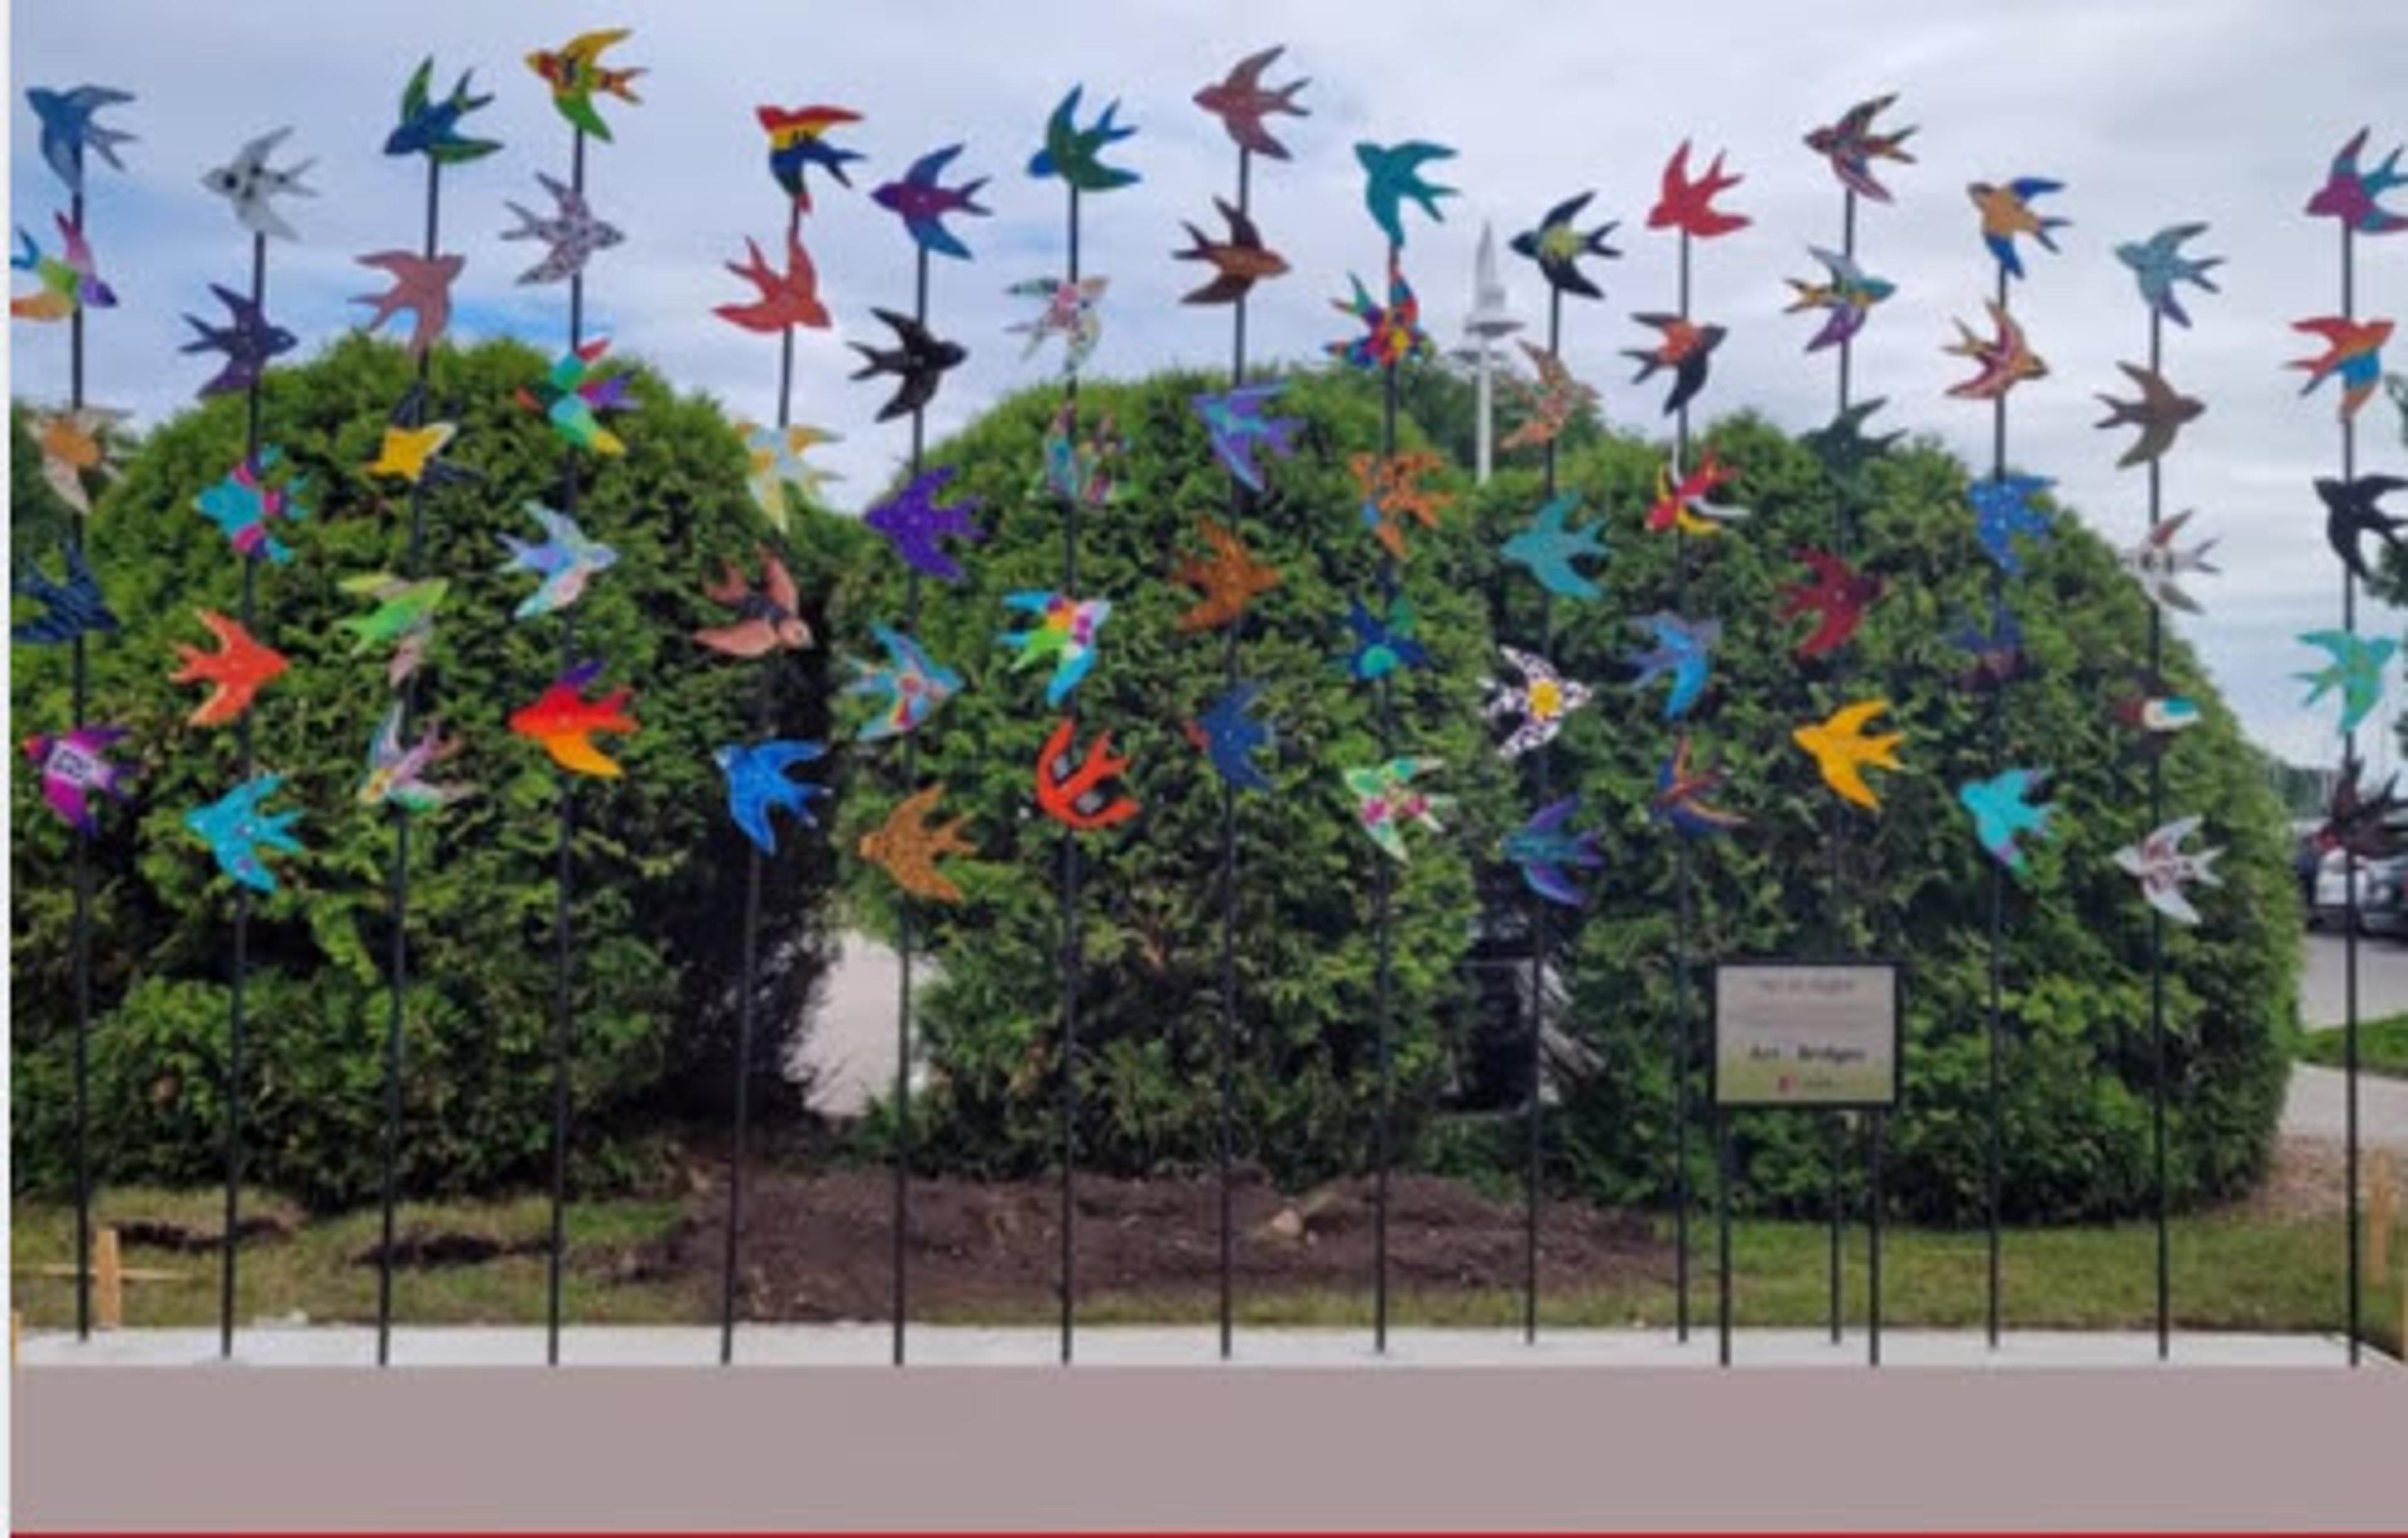 Art In Flight sculpture at Ludington Park in Escanaba Michigan